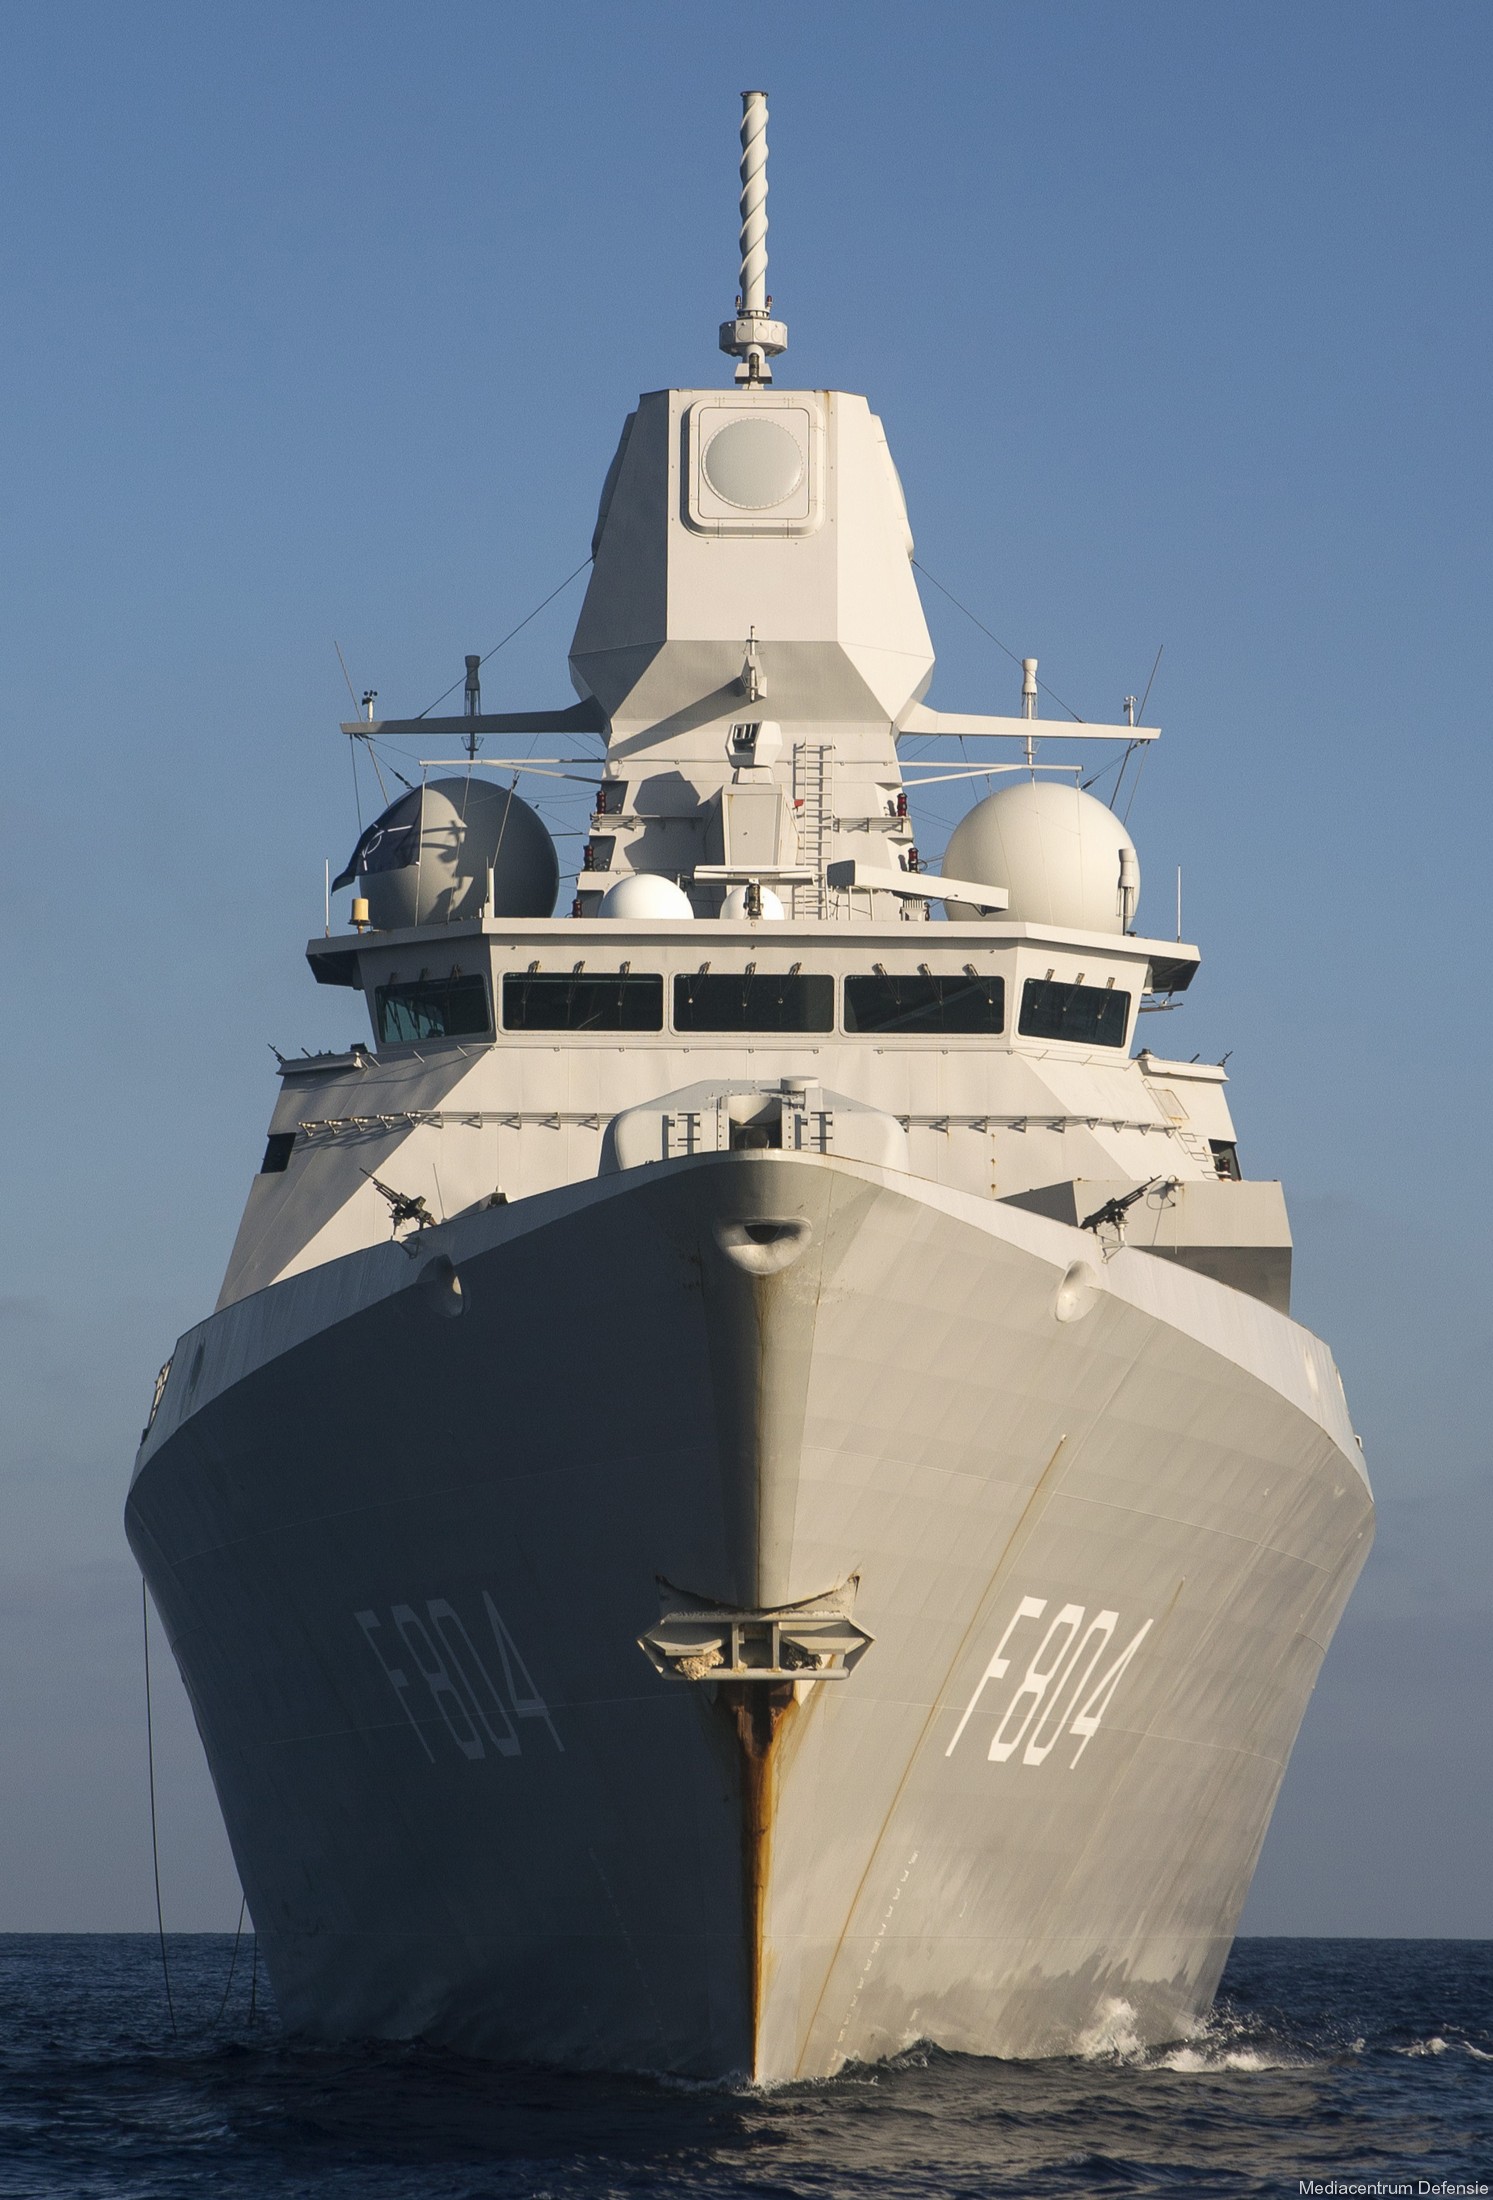 f-804 hnlms de ruyter guided missile frigate ffg lcf royal netherlands navy 06